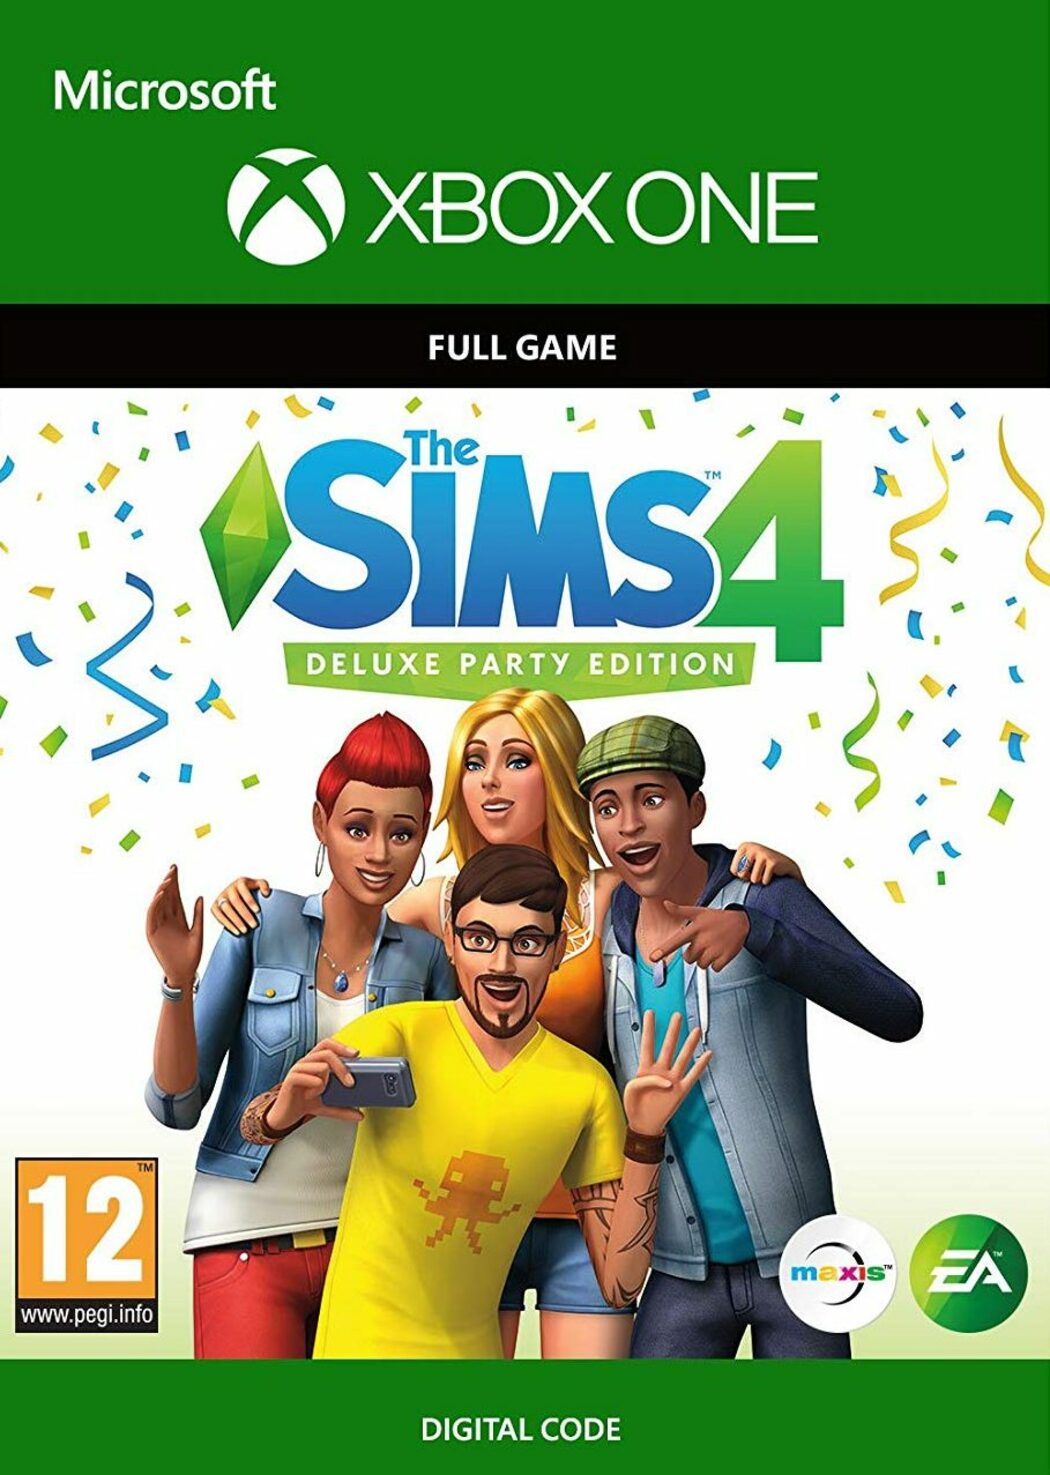 Sims cheats poster DIGITAL DOWNLOAD sims 4 poster gaming poster sims merch  decoration wall art sim gamer